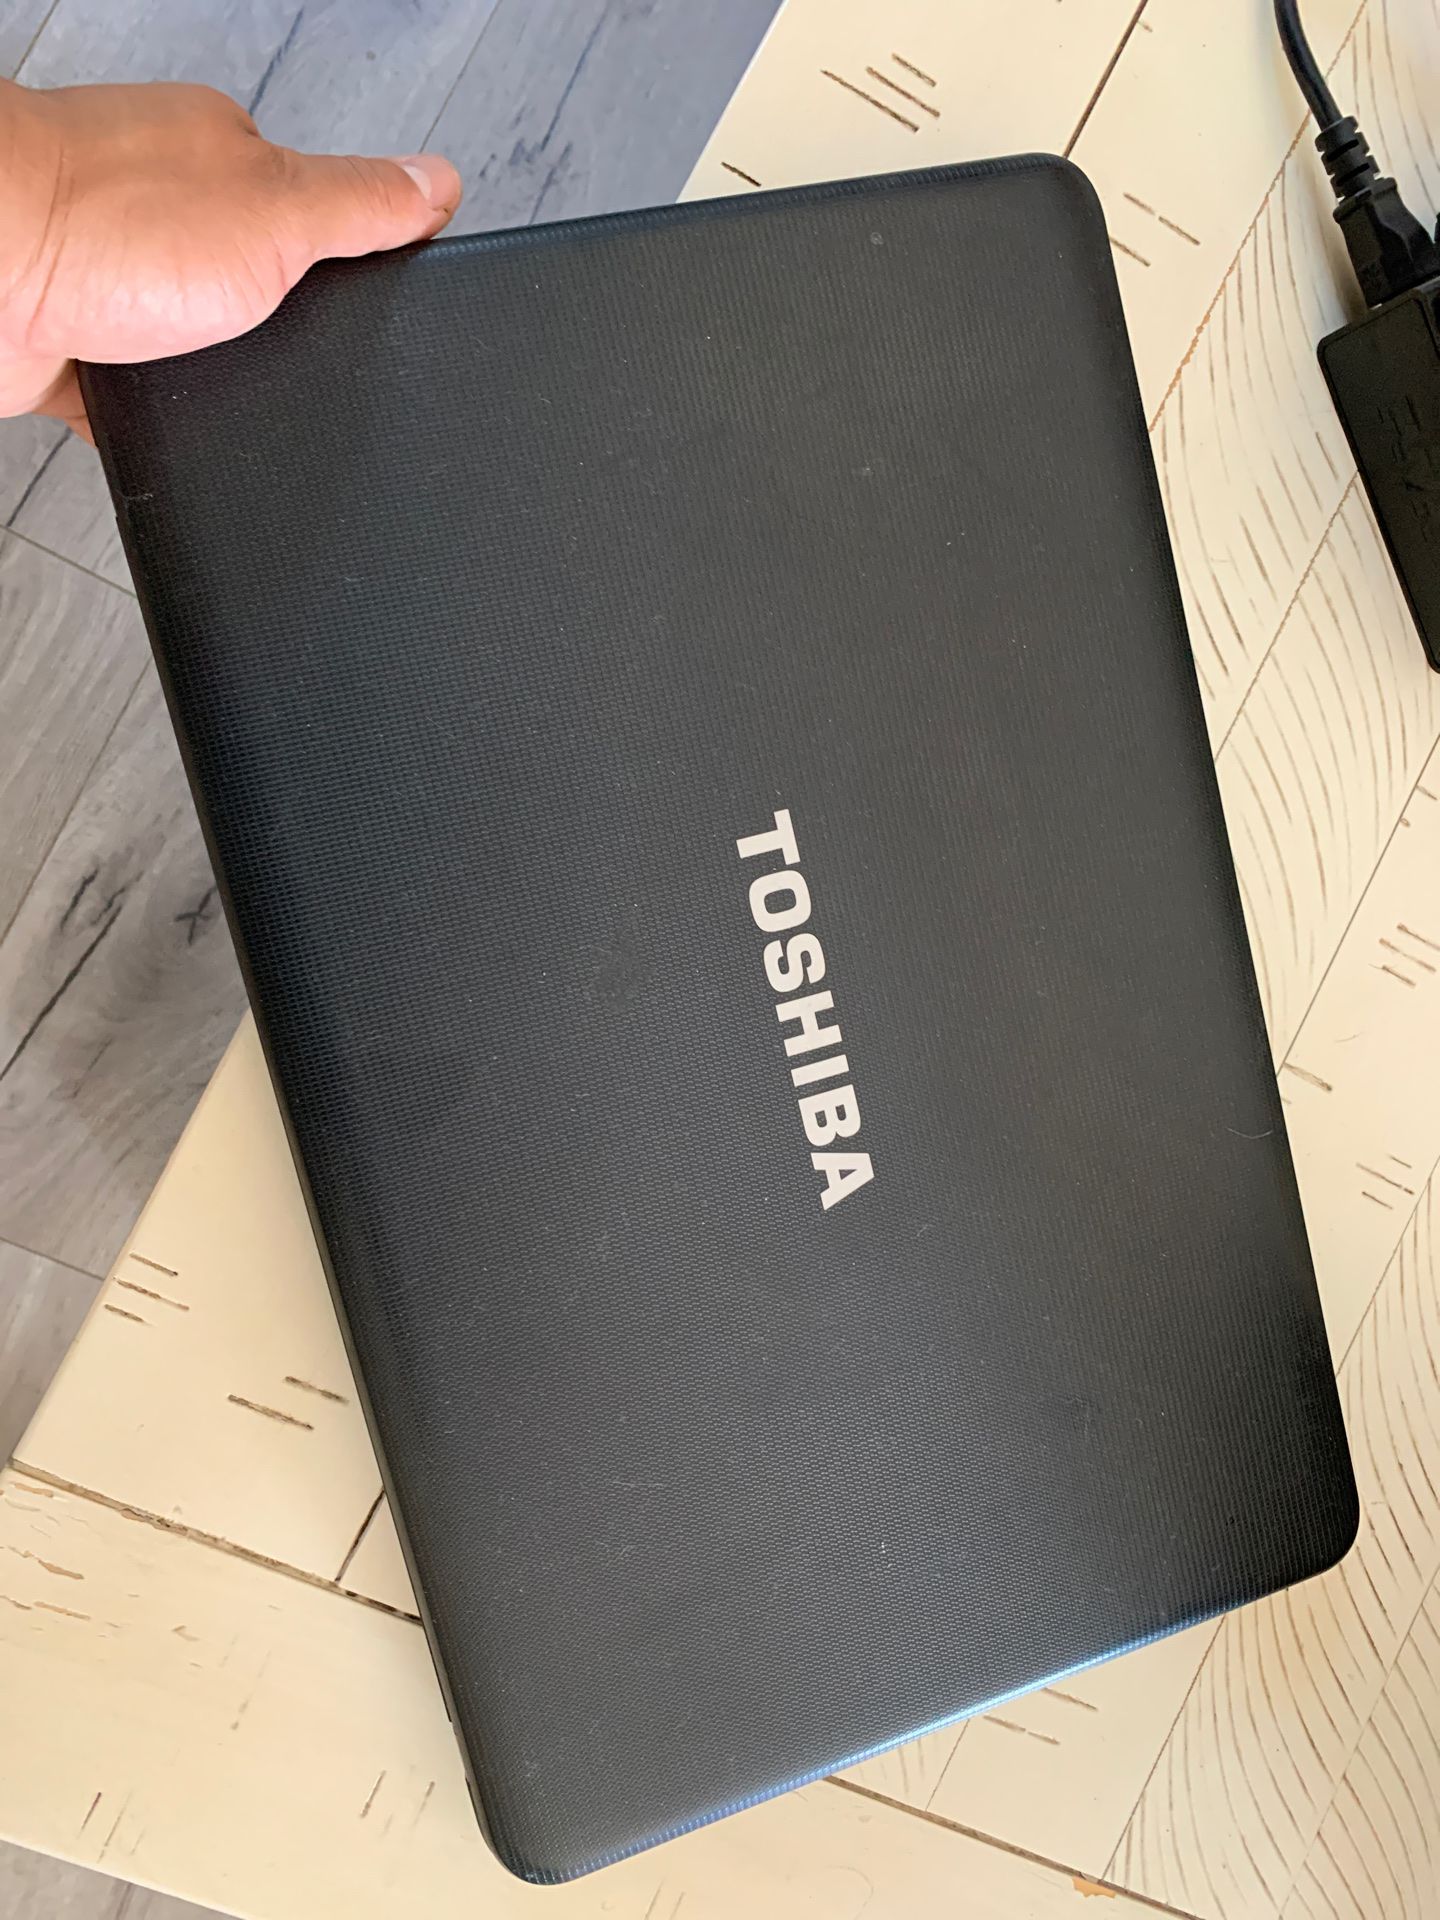 Toshiba Laptop Refurbished